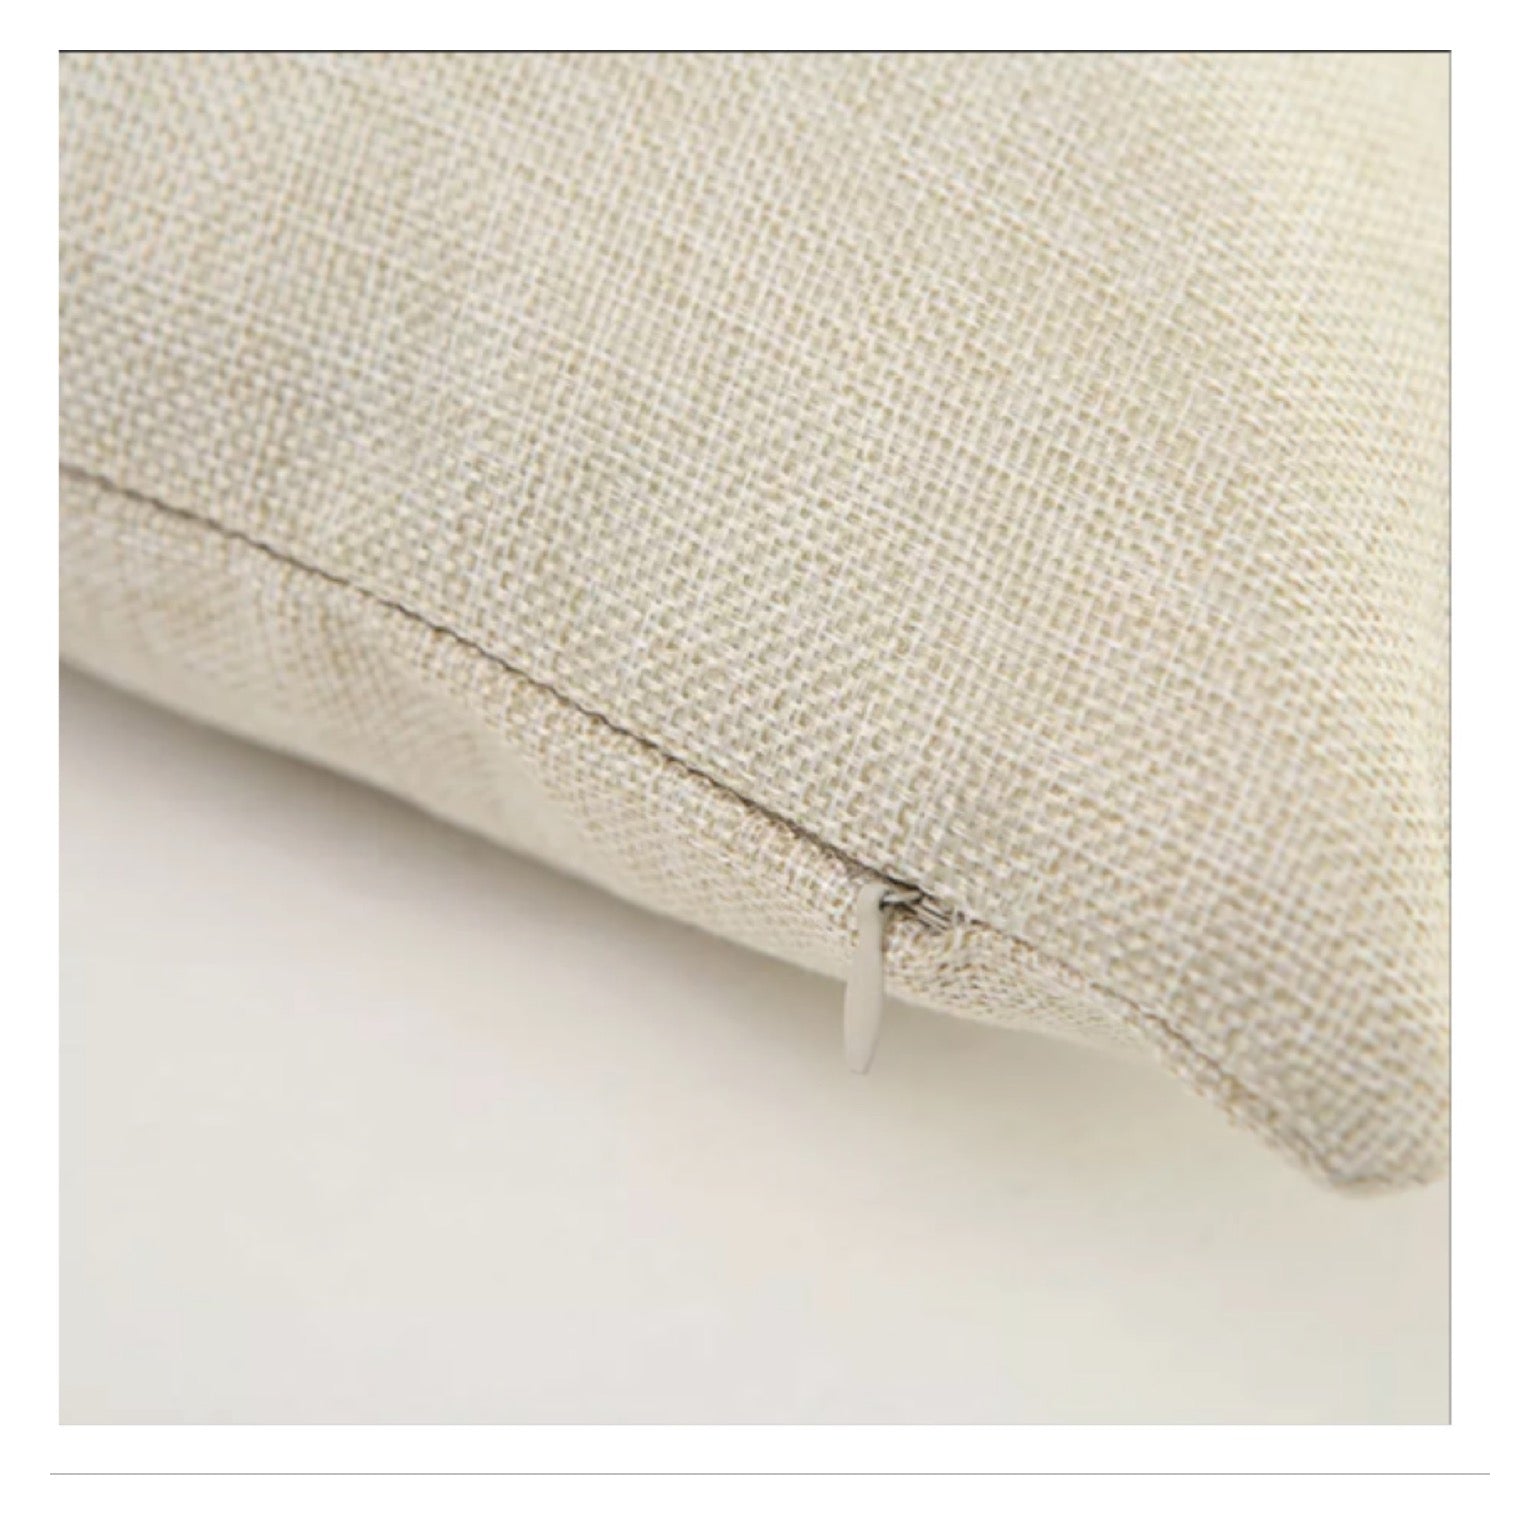 Cushion Cover Pillow Labrador Retriever Sally - The Renmy Store Homewares & Gifts 